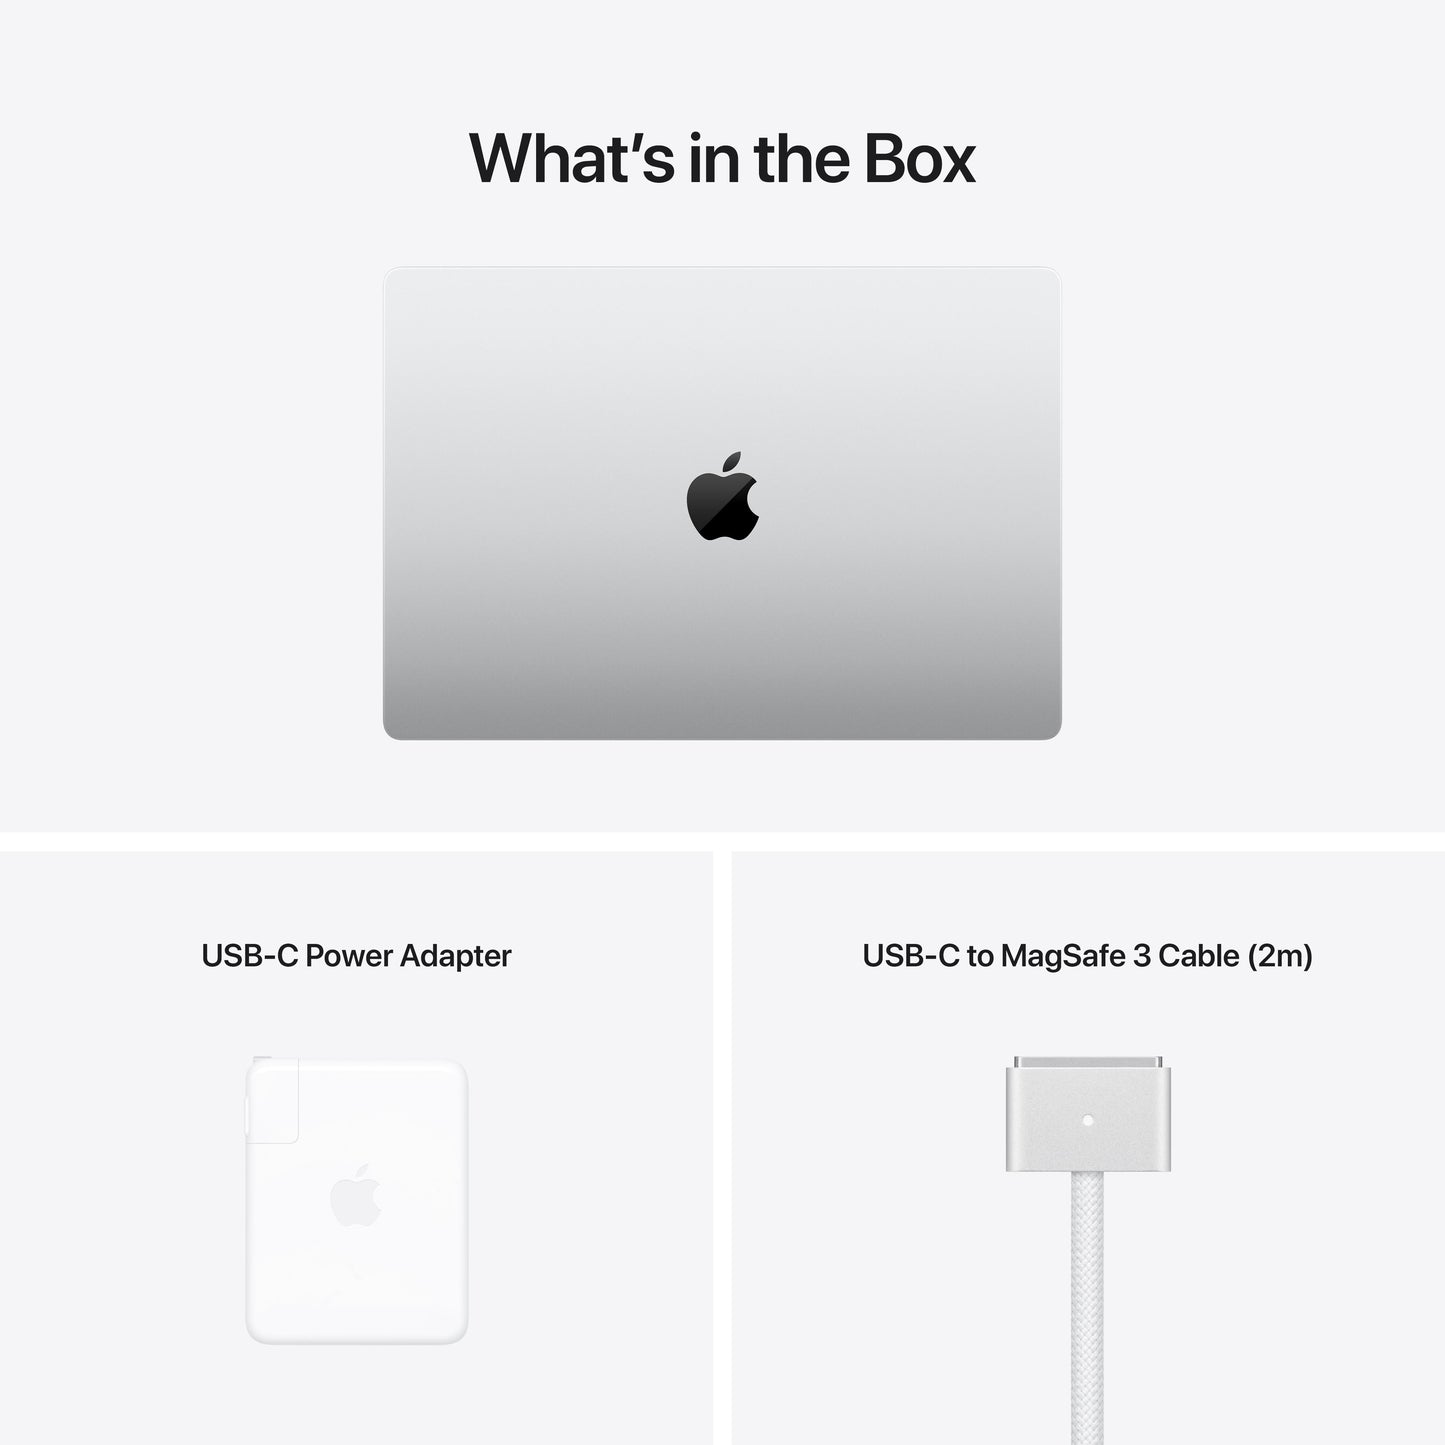 16-inch MacBook Pro: Apple M1 Pro chip with 10_core CPU and 16_core GPU 1TB SSD - Silver